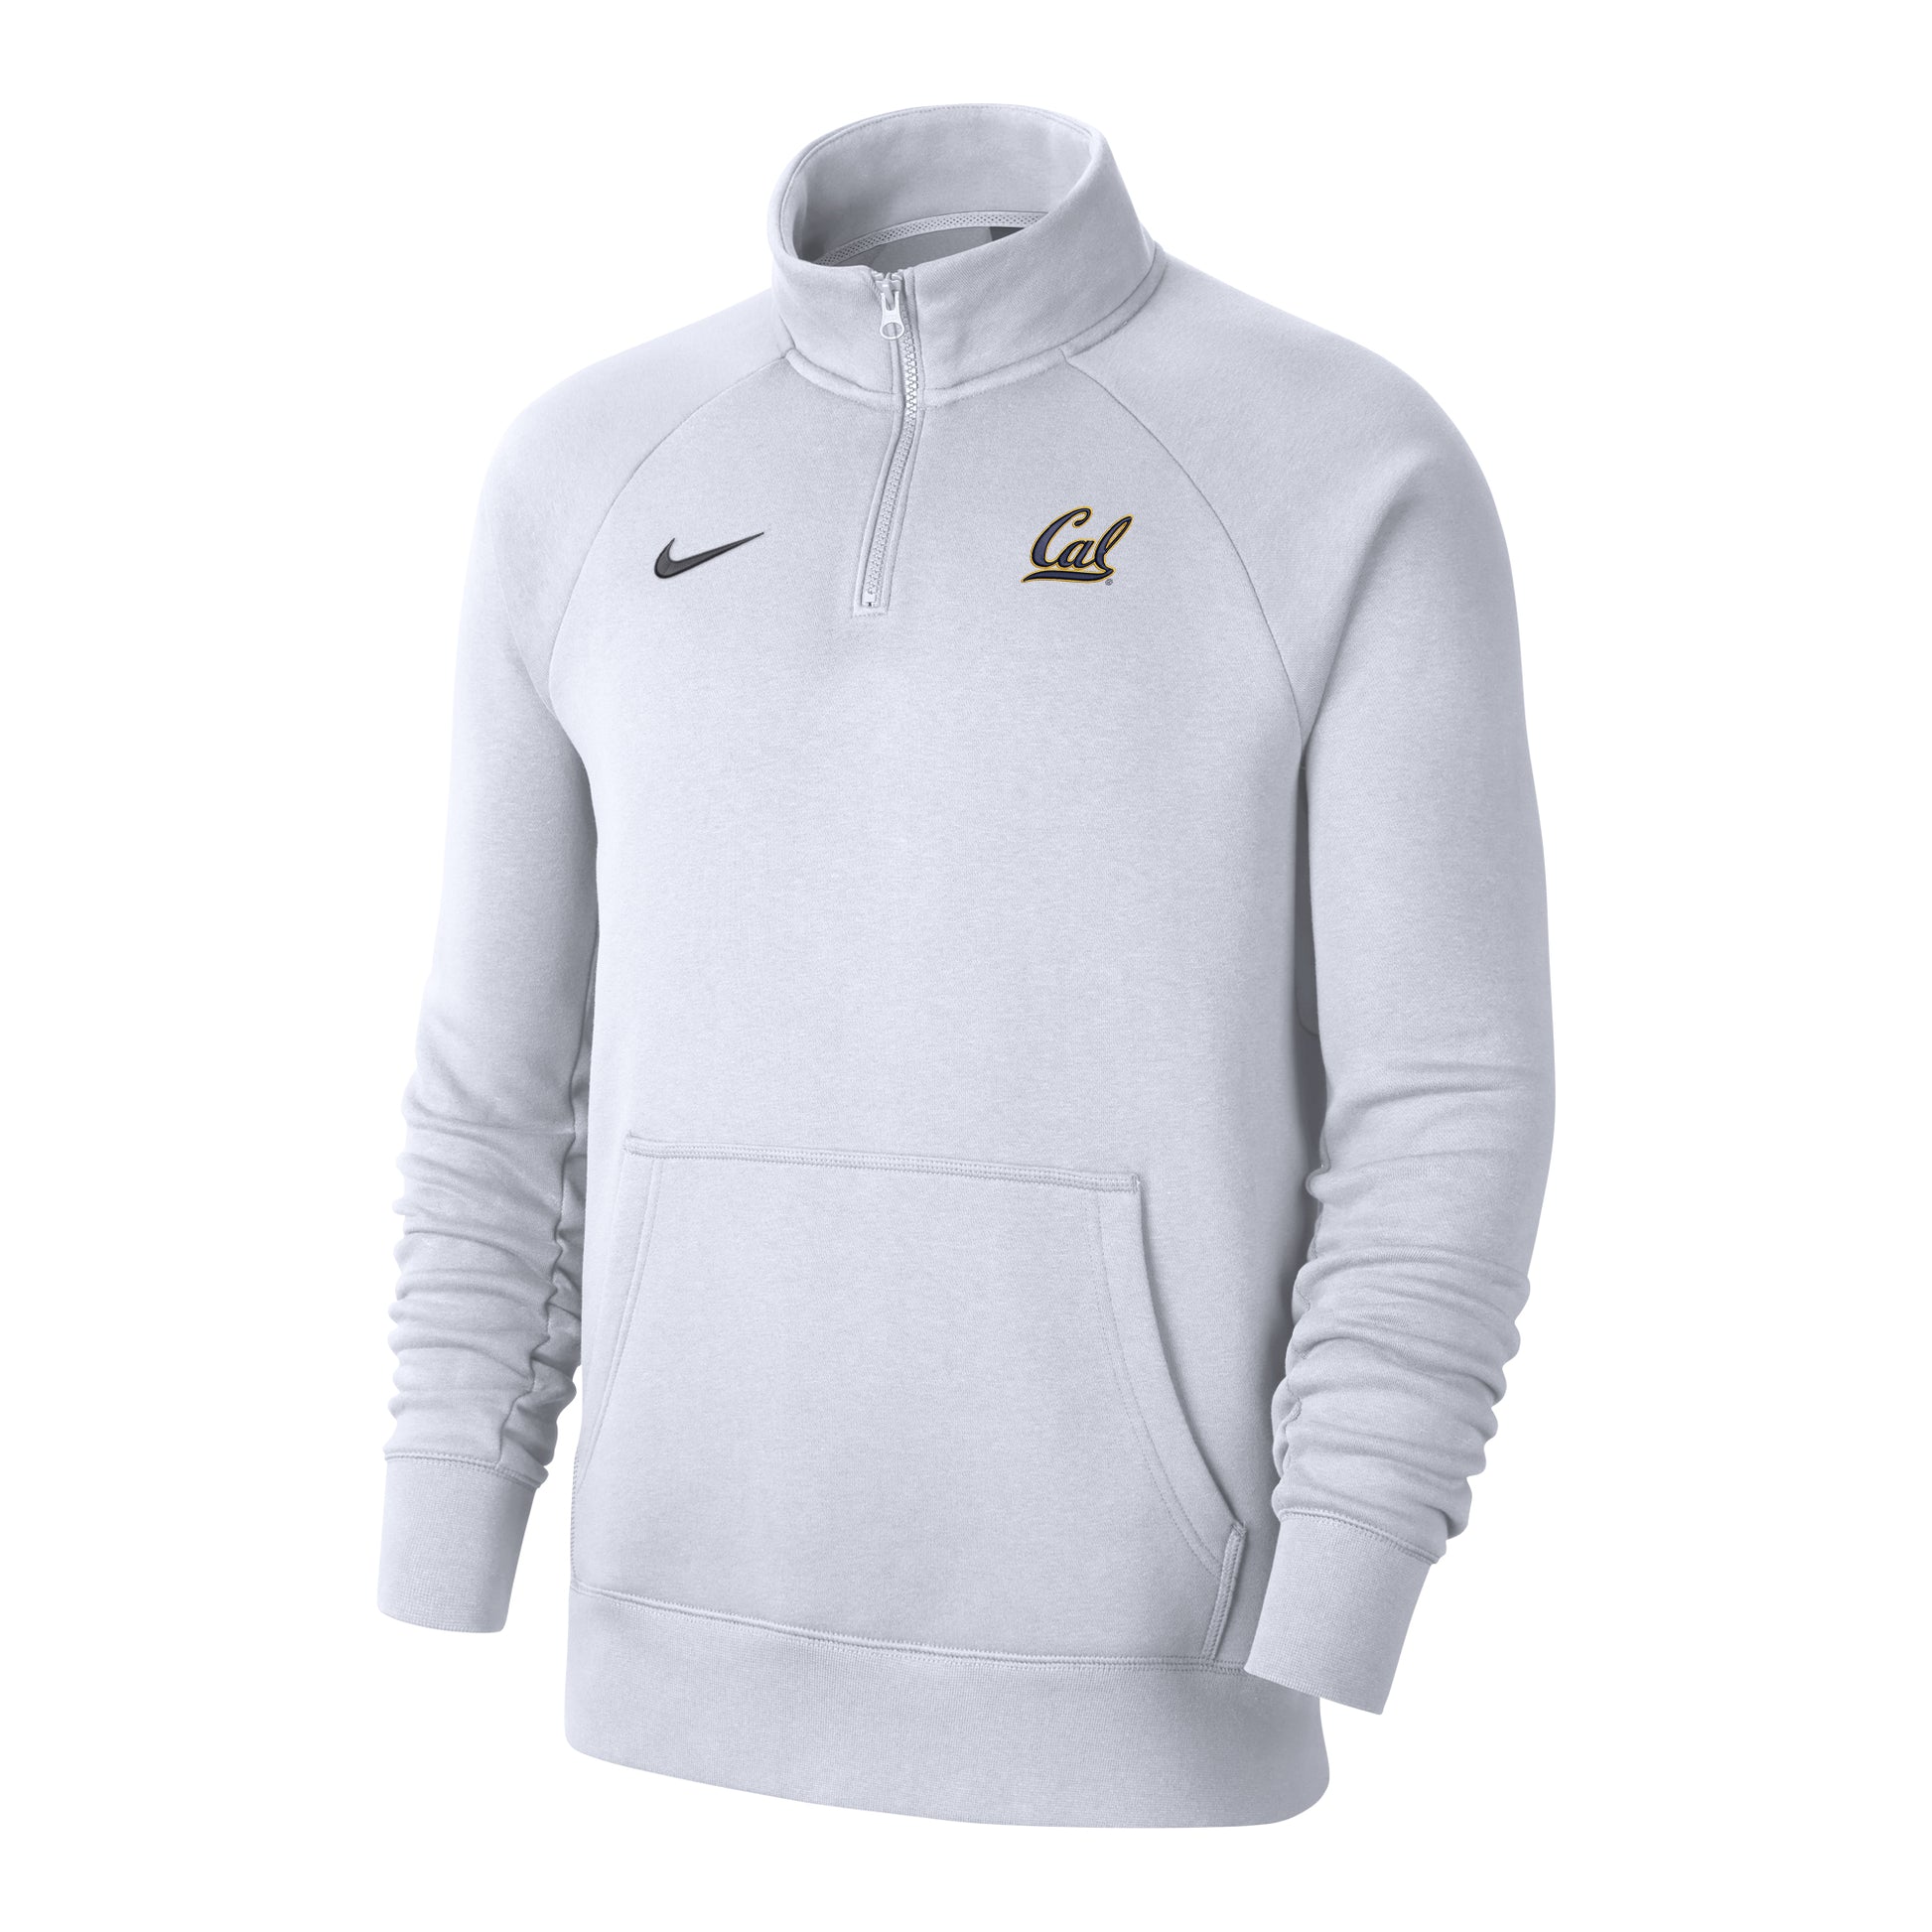 U.C. Berkeley Cal embroidered Nike club fleece quarter zip sweatshirt- College Wear